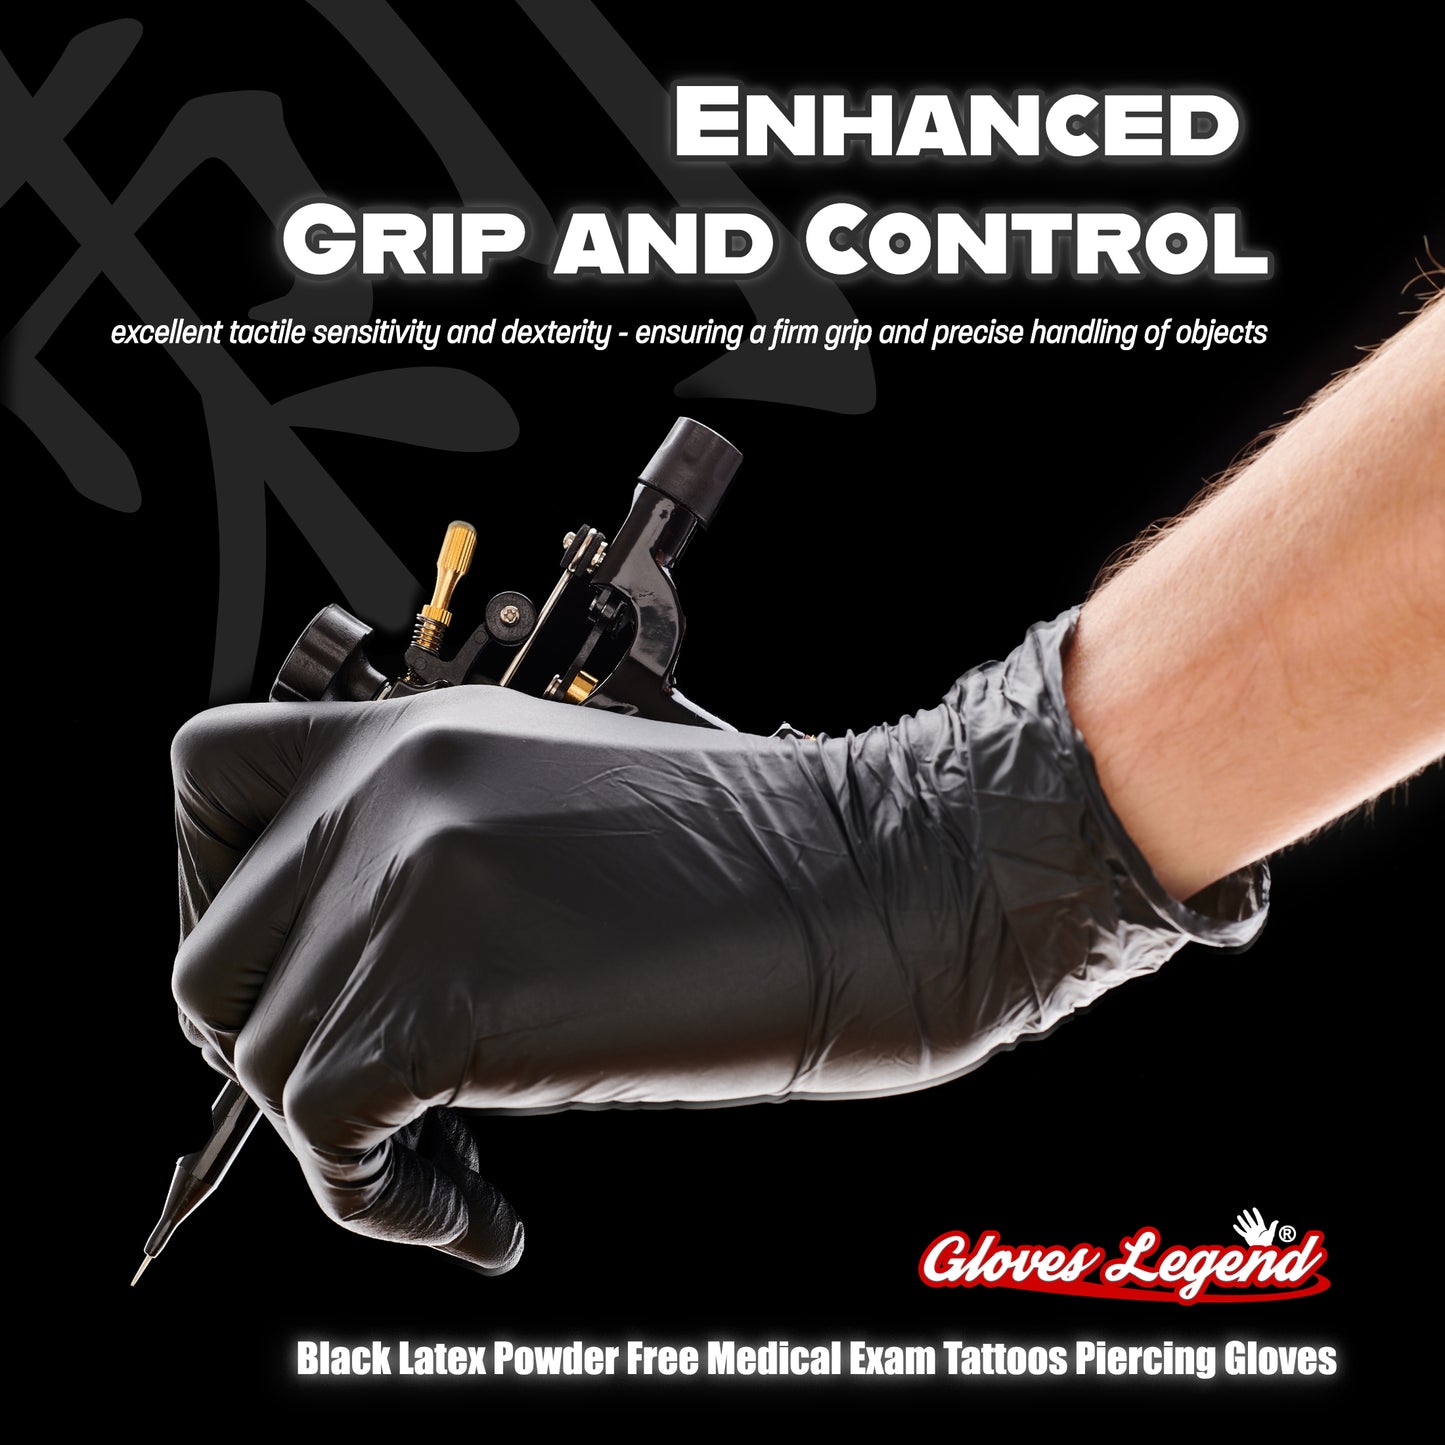 One Box (100 Gloves) Size Large -  Black Latex Powder Free Medical Exam Tattoos Piercing Gloves